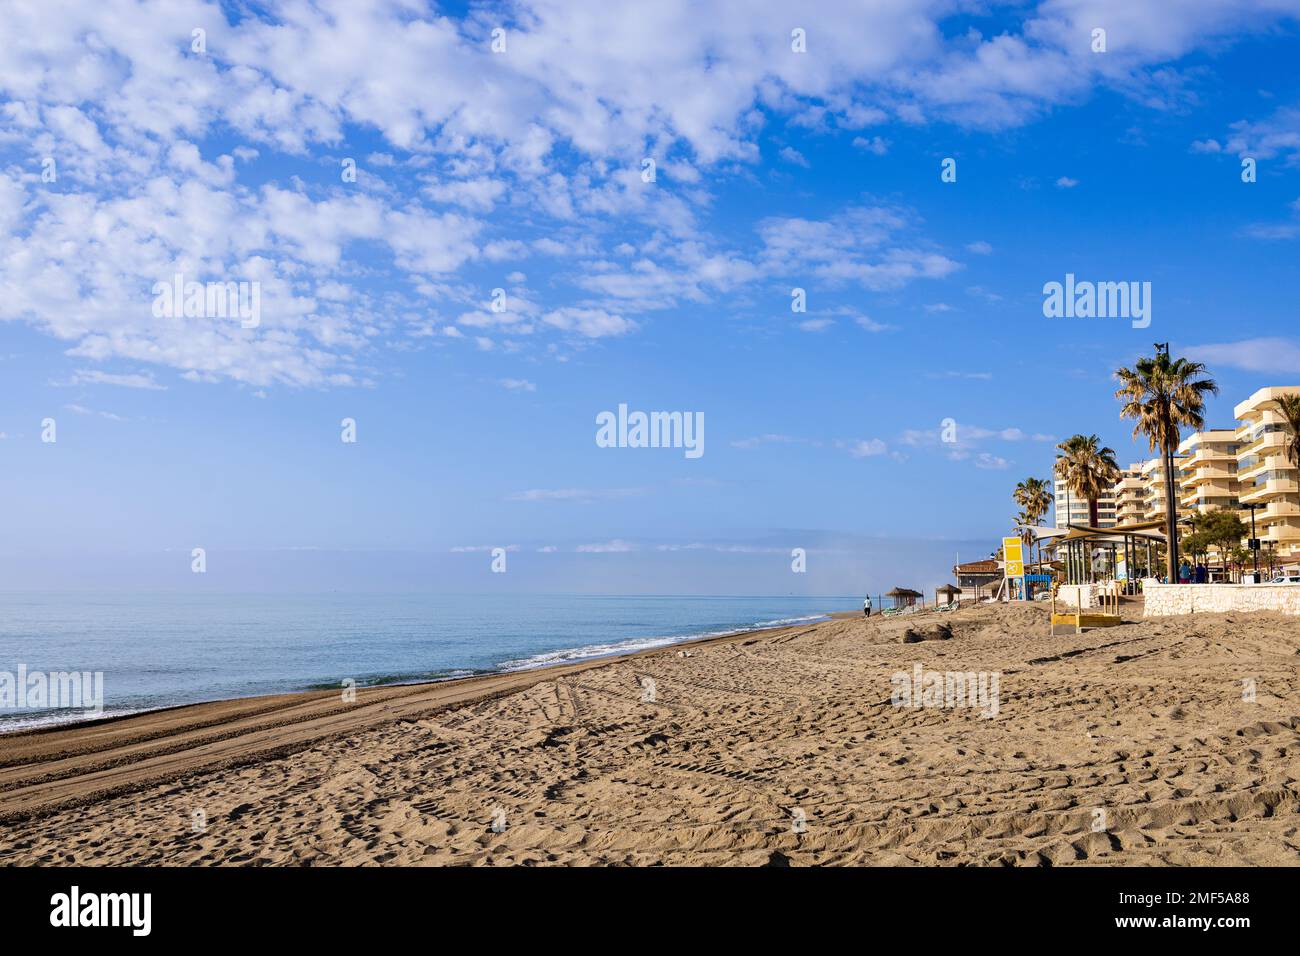 Playa Fuengirola (Fuengirola beach), sunny day. Fuengirola, Costa del Sol, Málaga province, Andalusia, Spain. Stock Photo